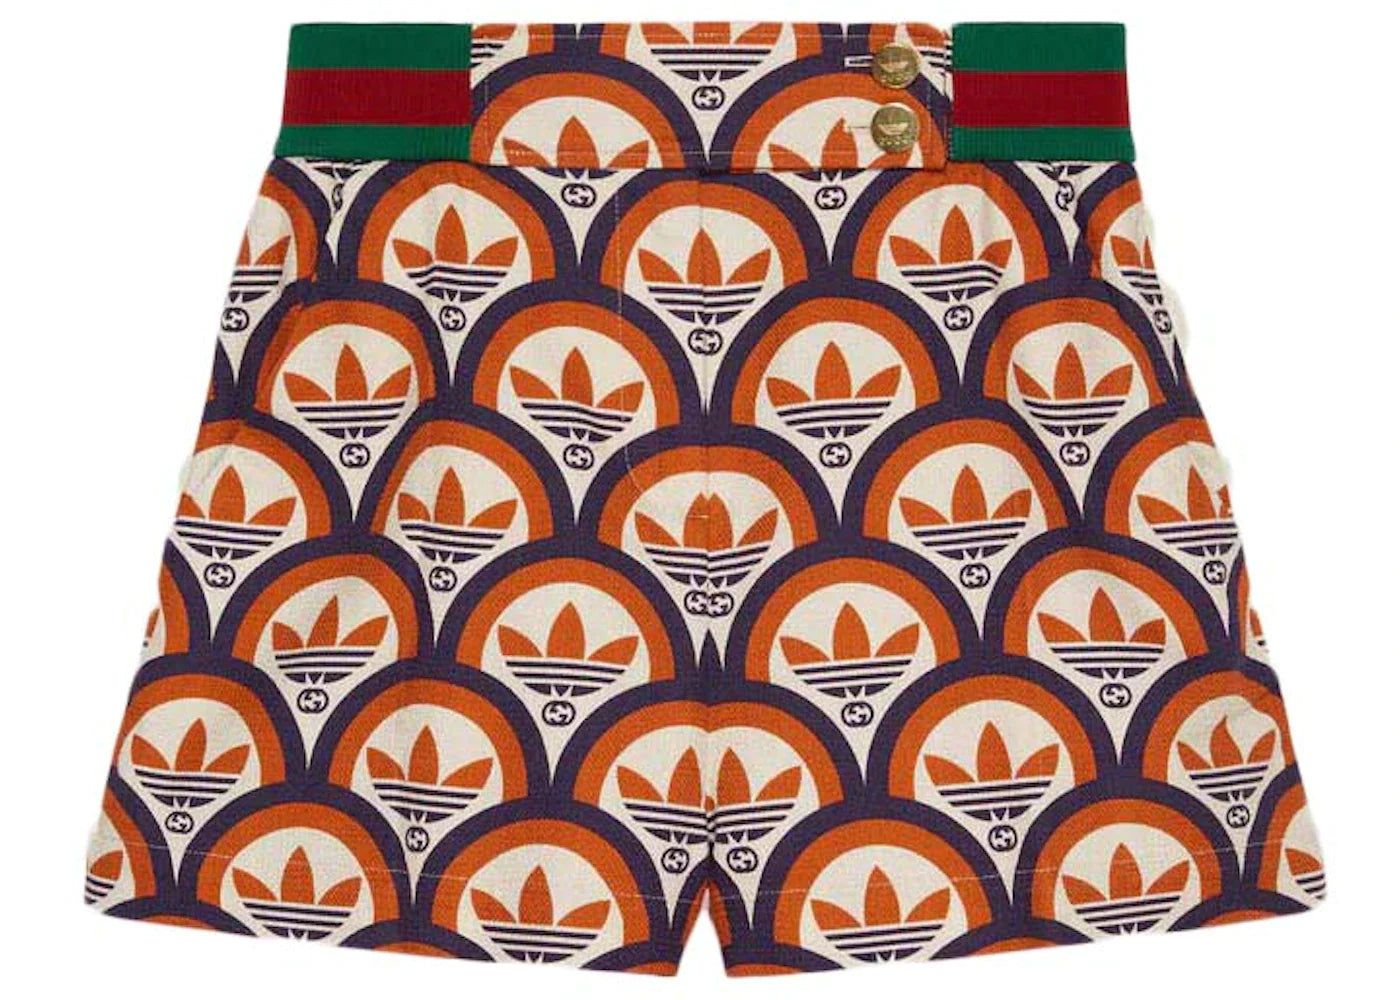 Gucci x adidas Cotton Shorts Orange